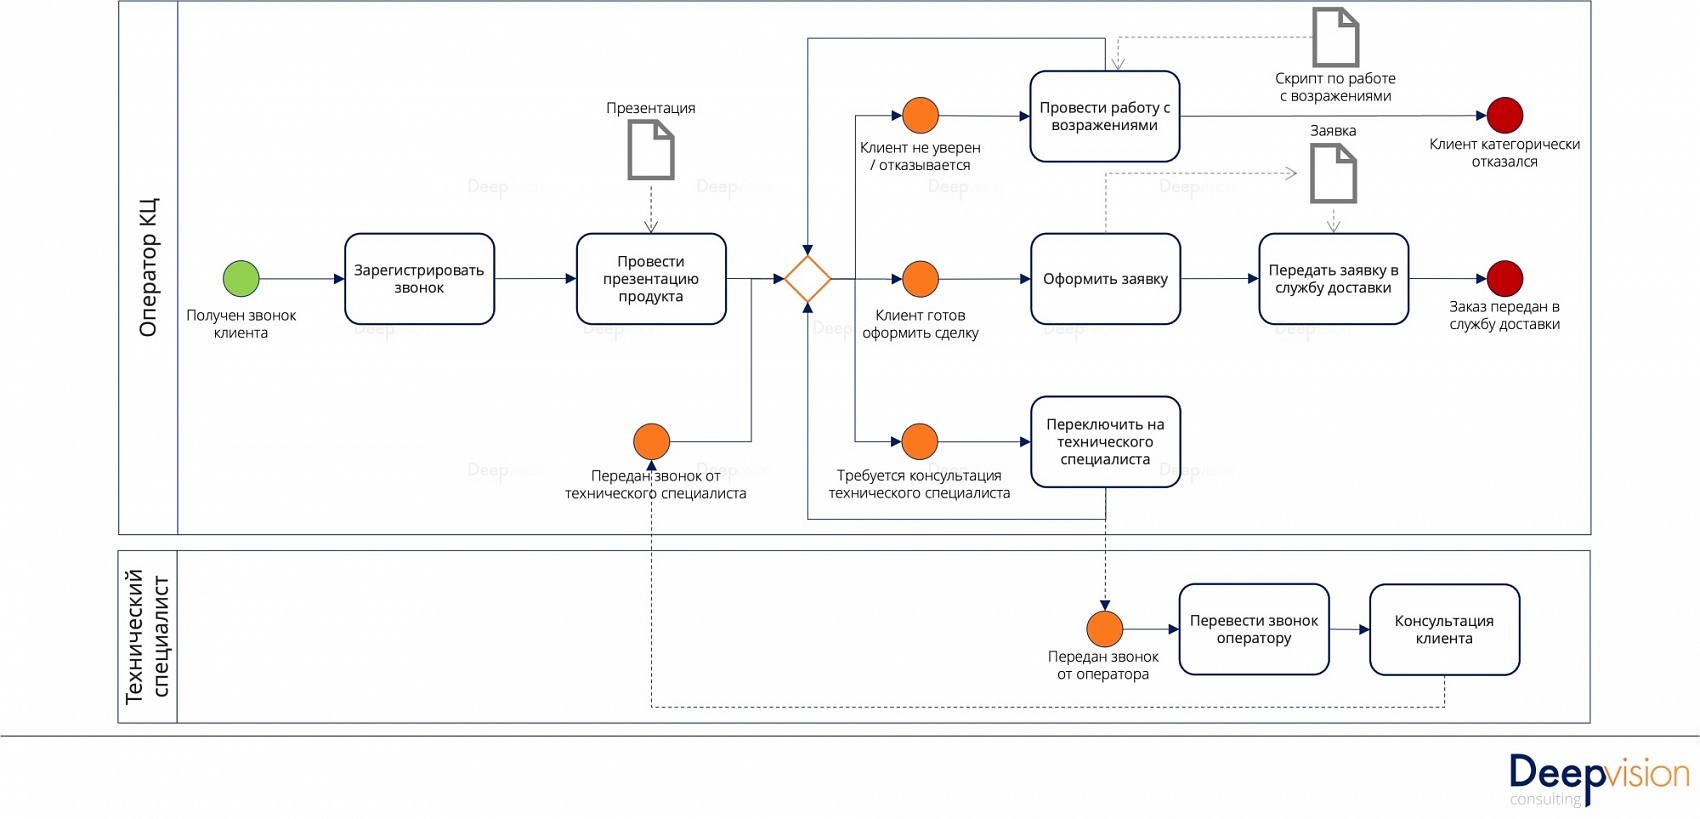 Схема бизнес процесса для нетерпеливых 5.jpg